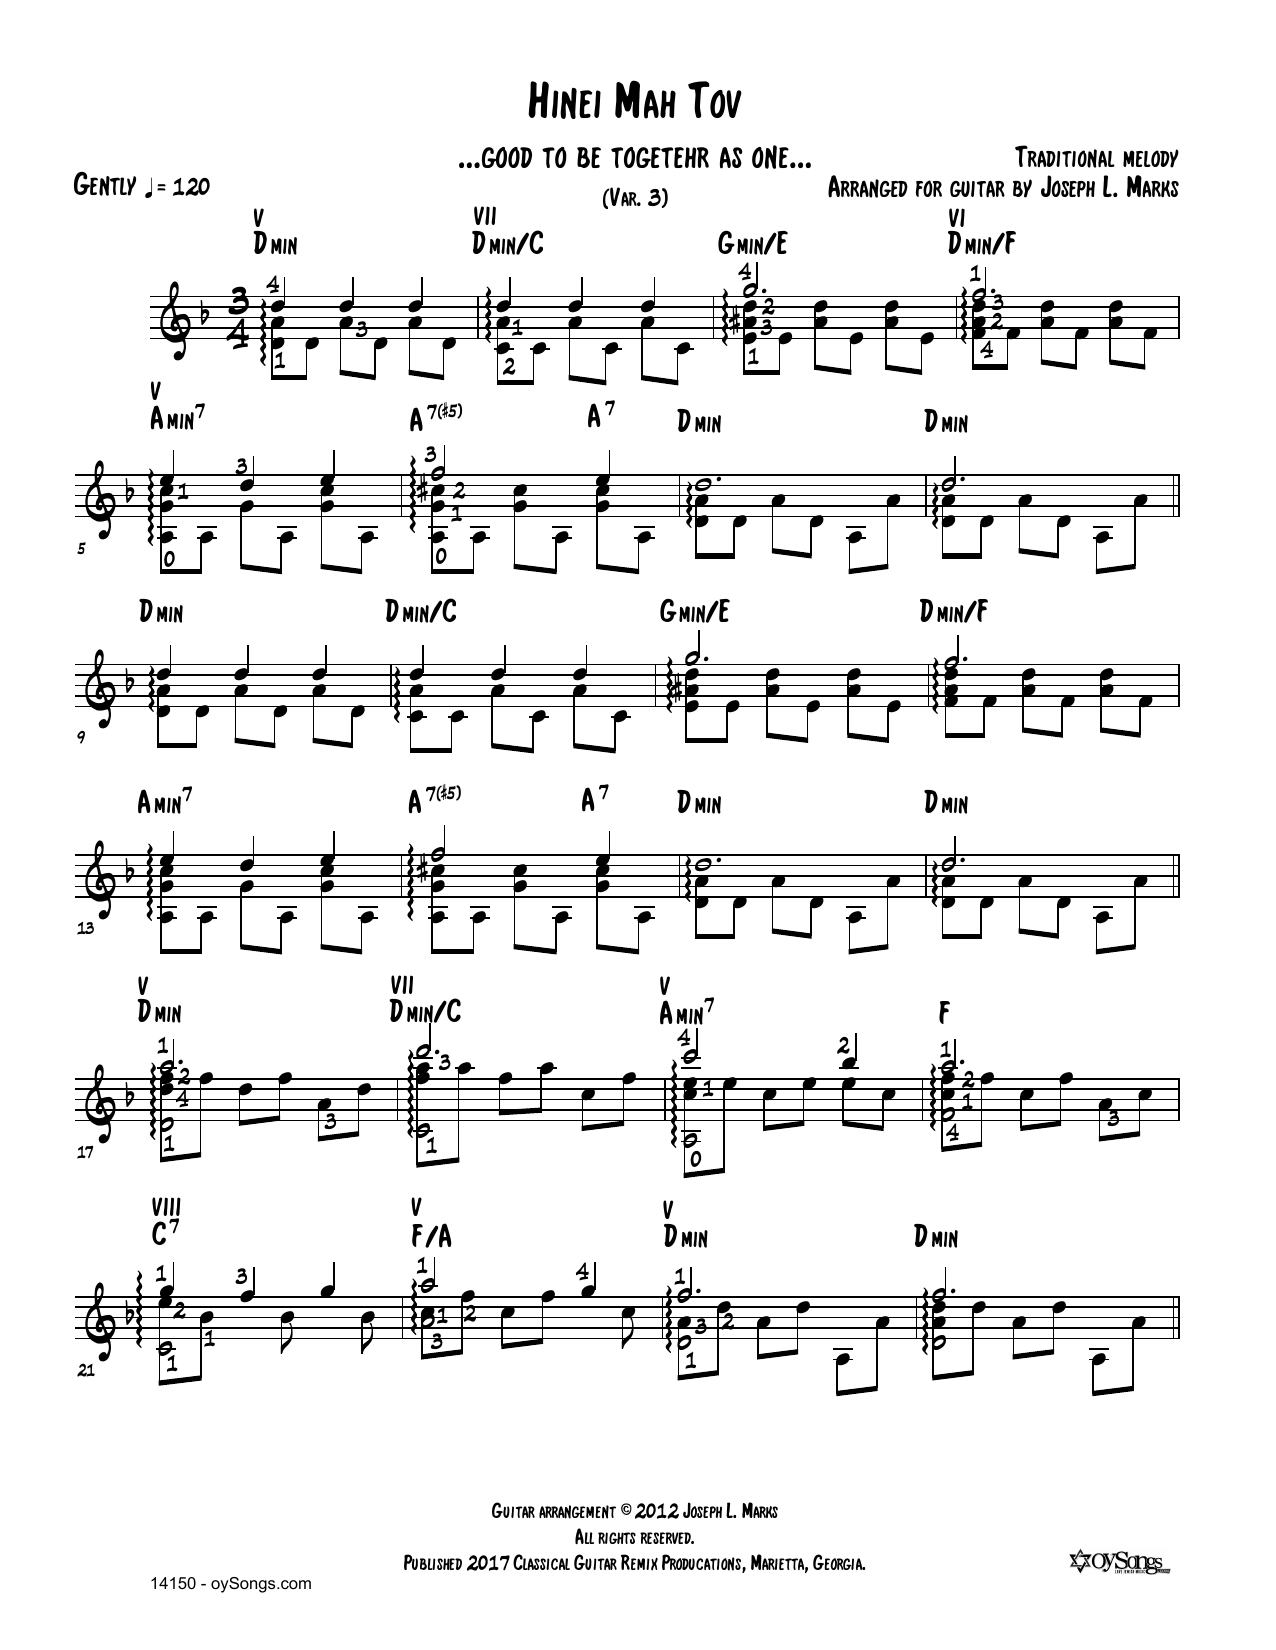 Traditional Melody Hinei Mah Tov Var 3 (arr. Joe Marks) Sheet Music Notes & Chords for Guitar Tab - Download or Print PDF